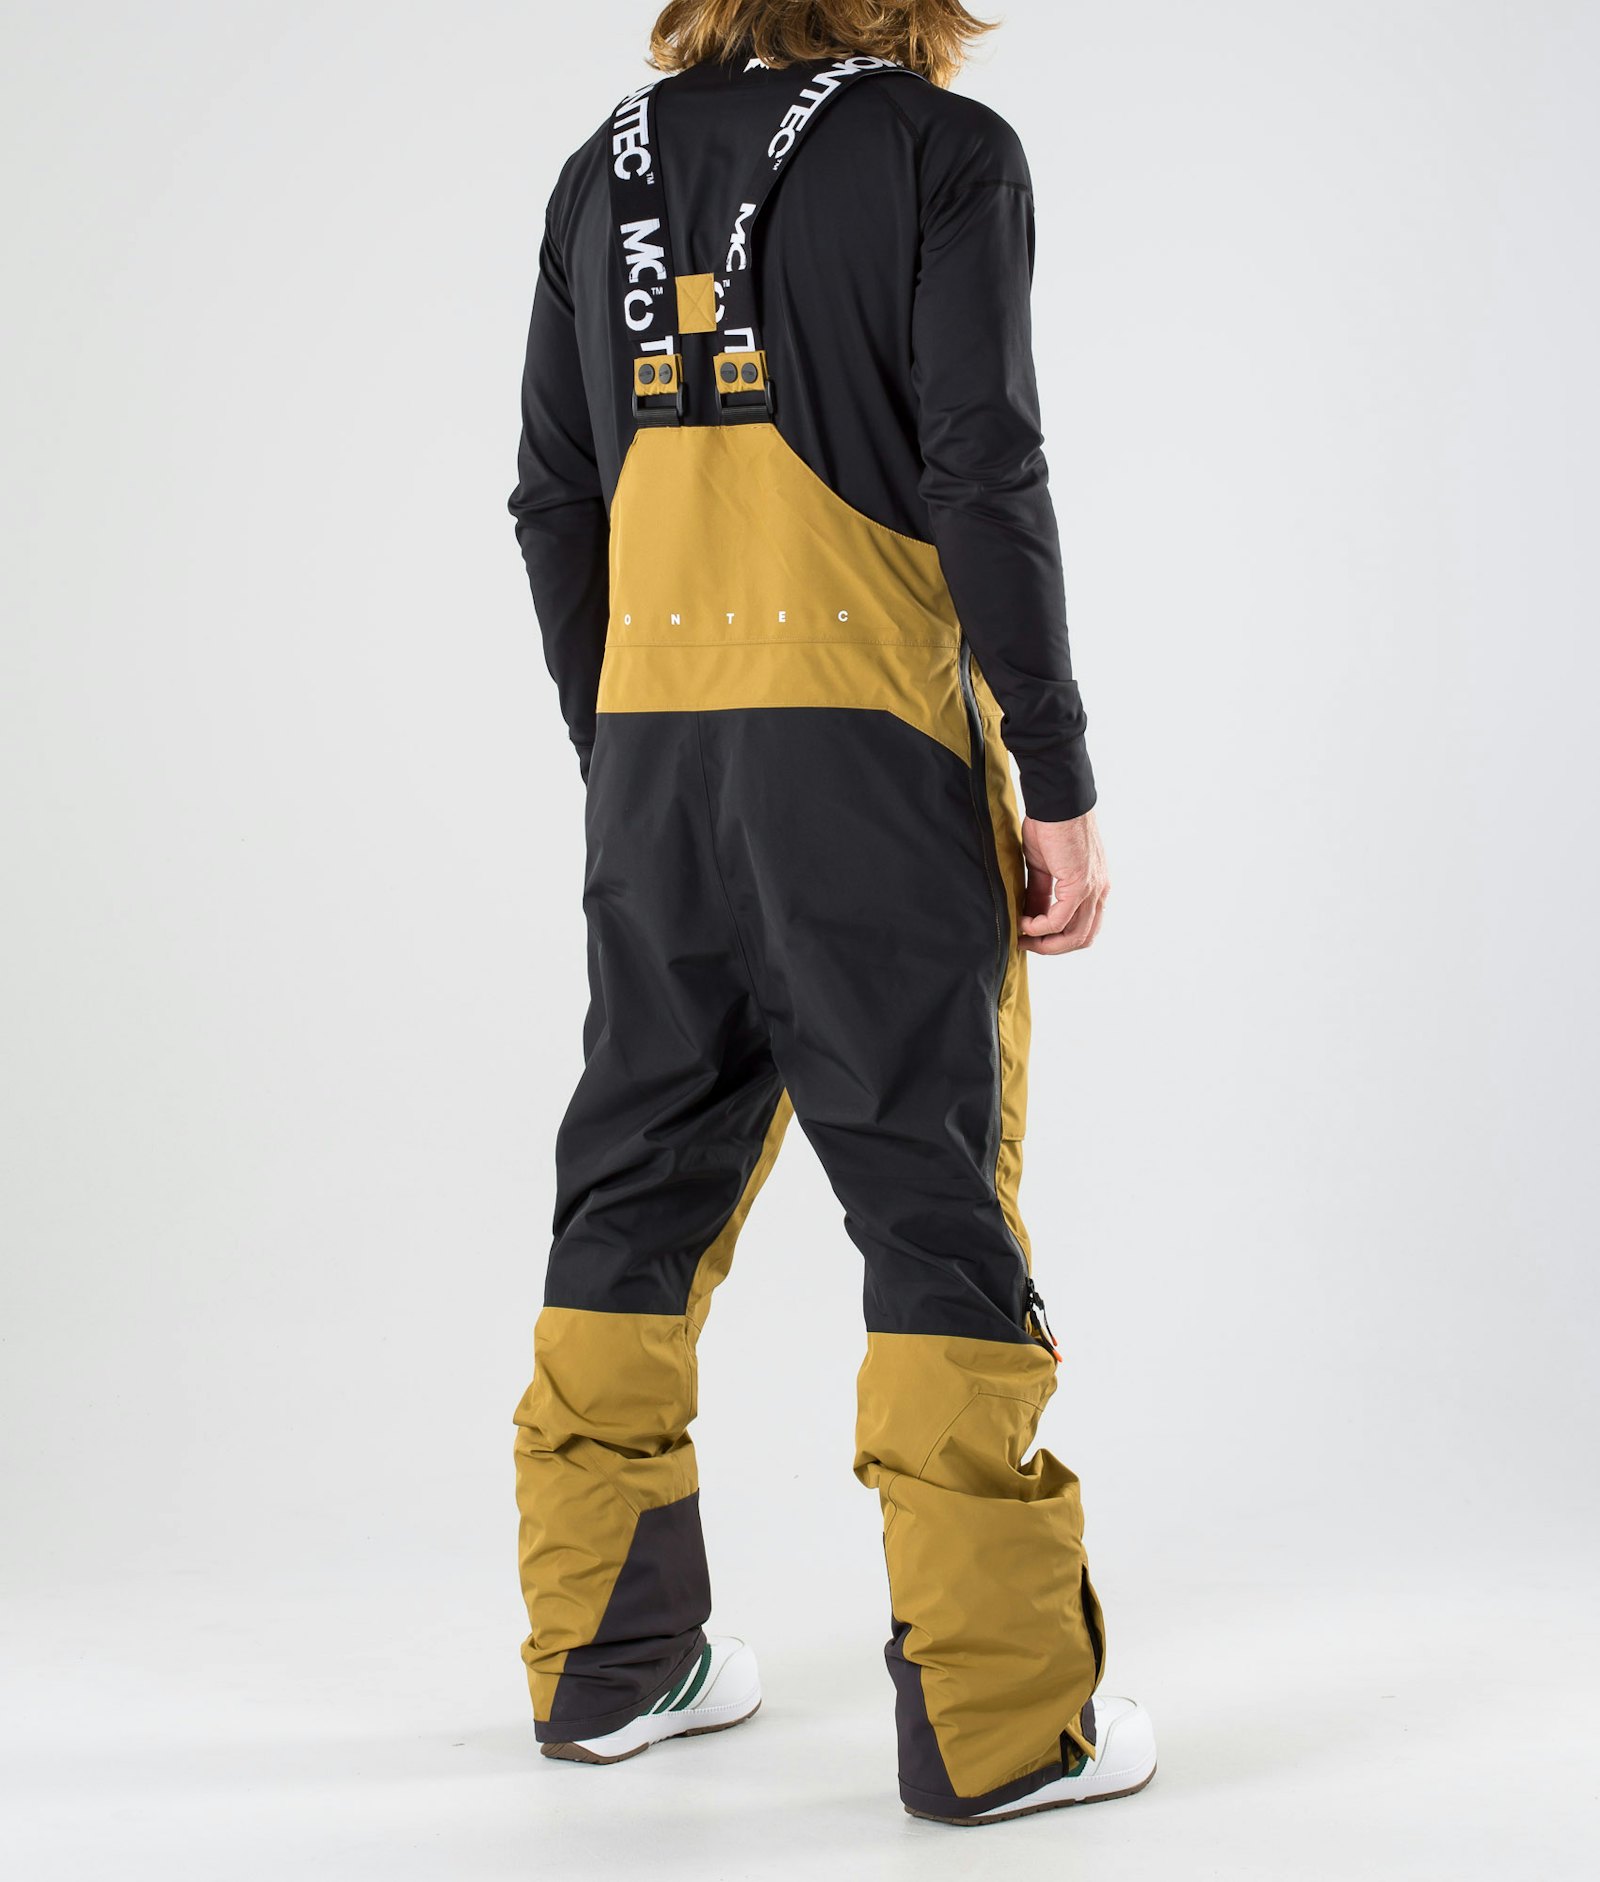 Montec Fenix Snowboard Pants Men Gold